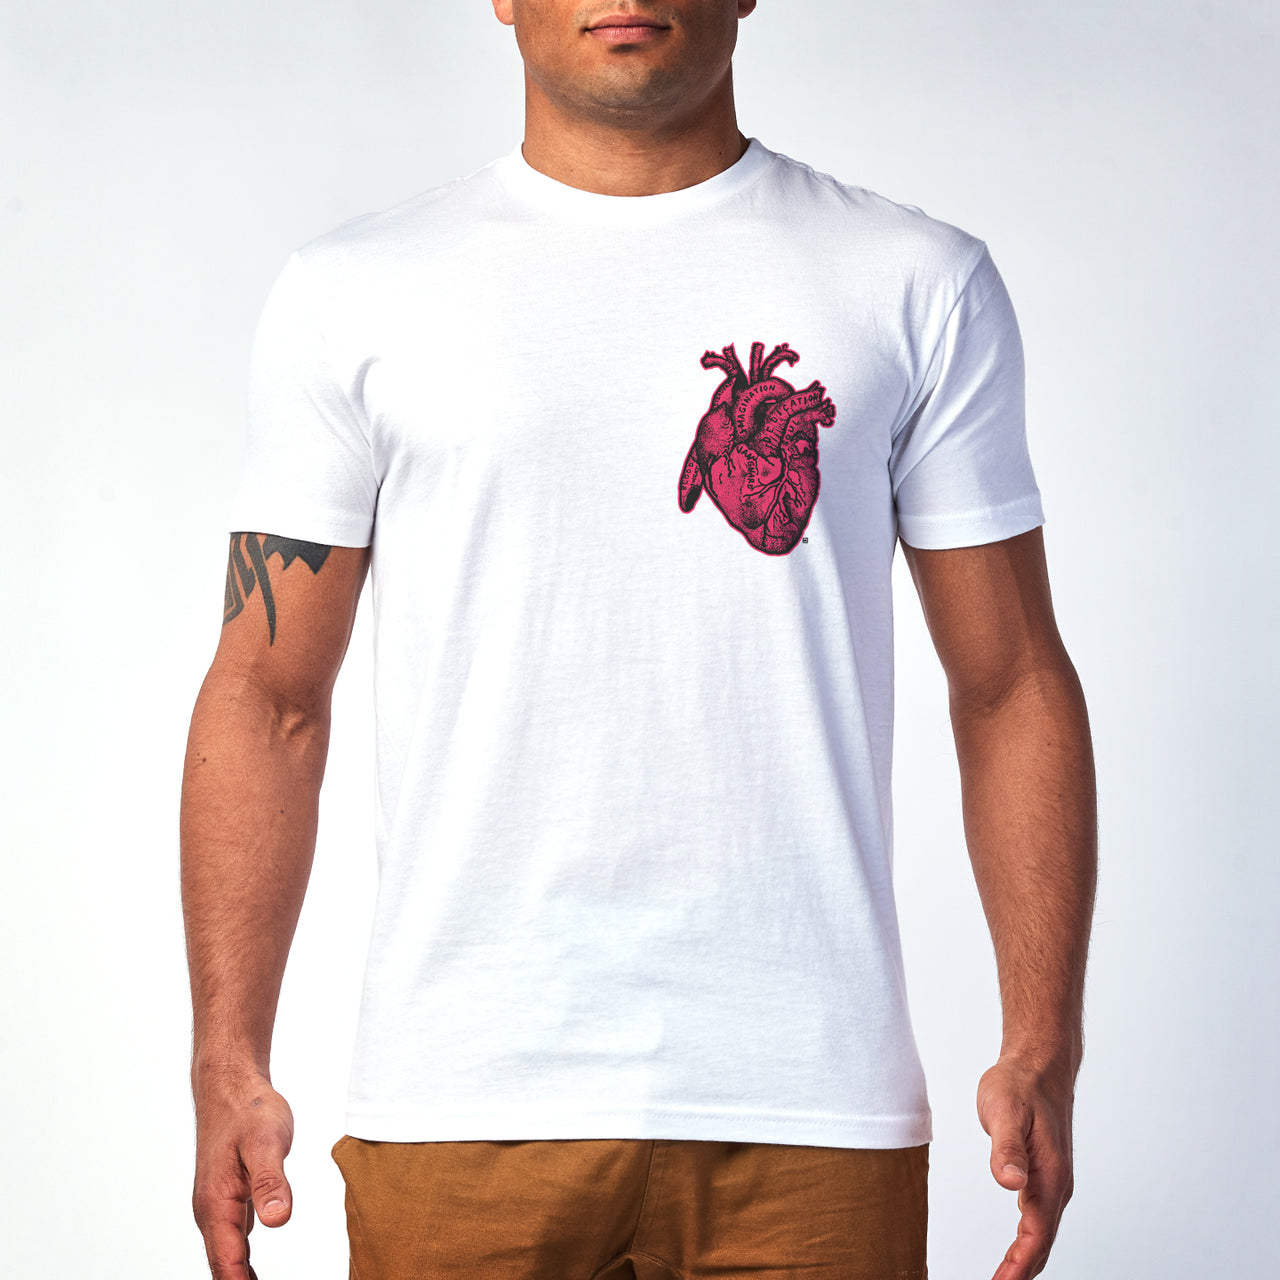 VANGUARD / WITH HEART Tシャツ - WHITE